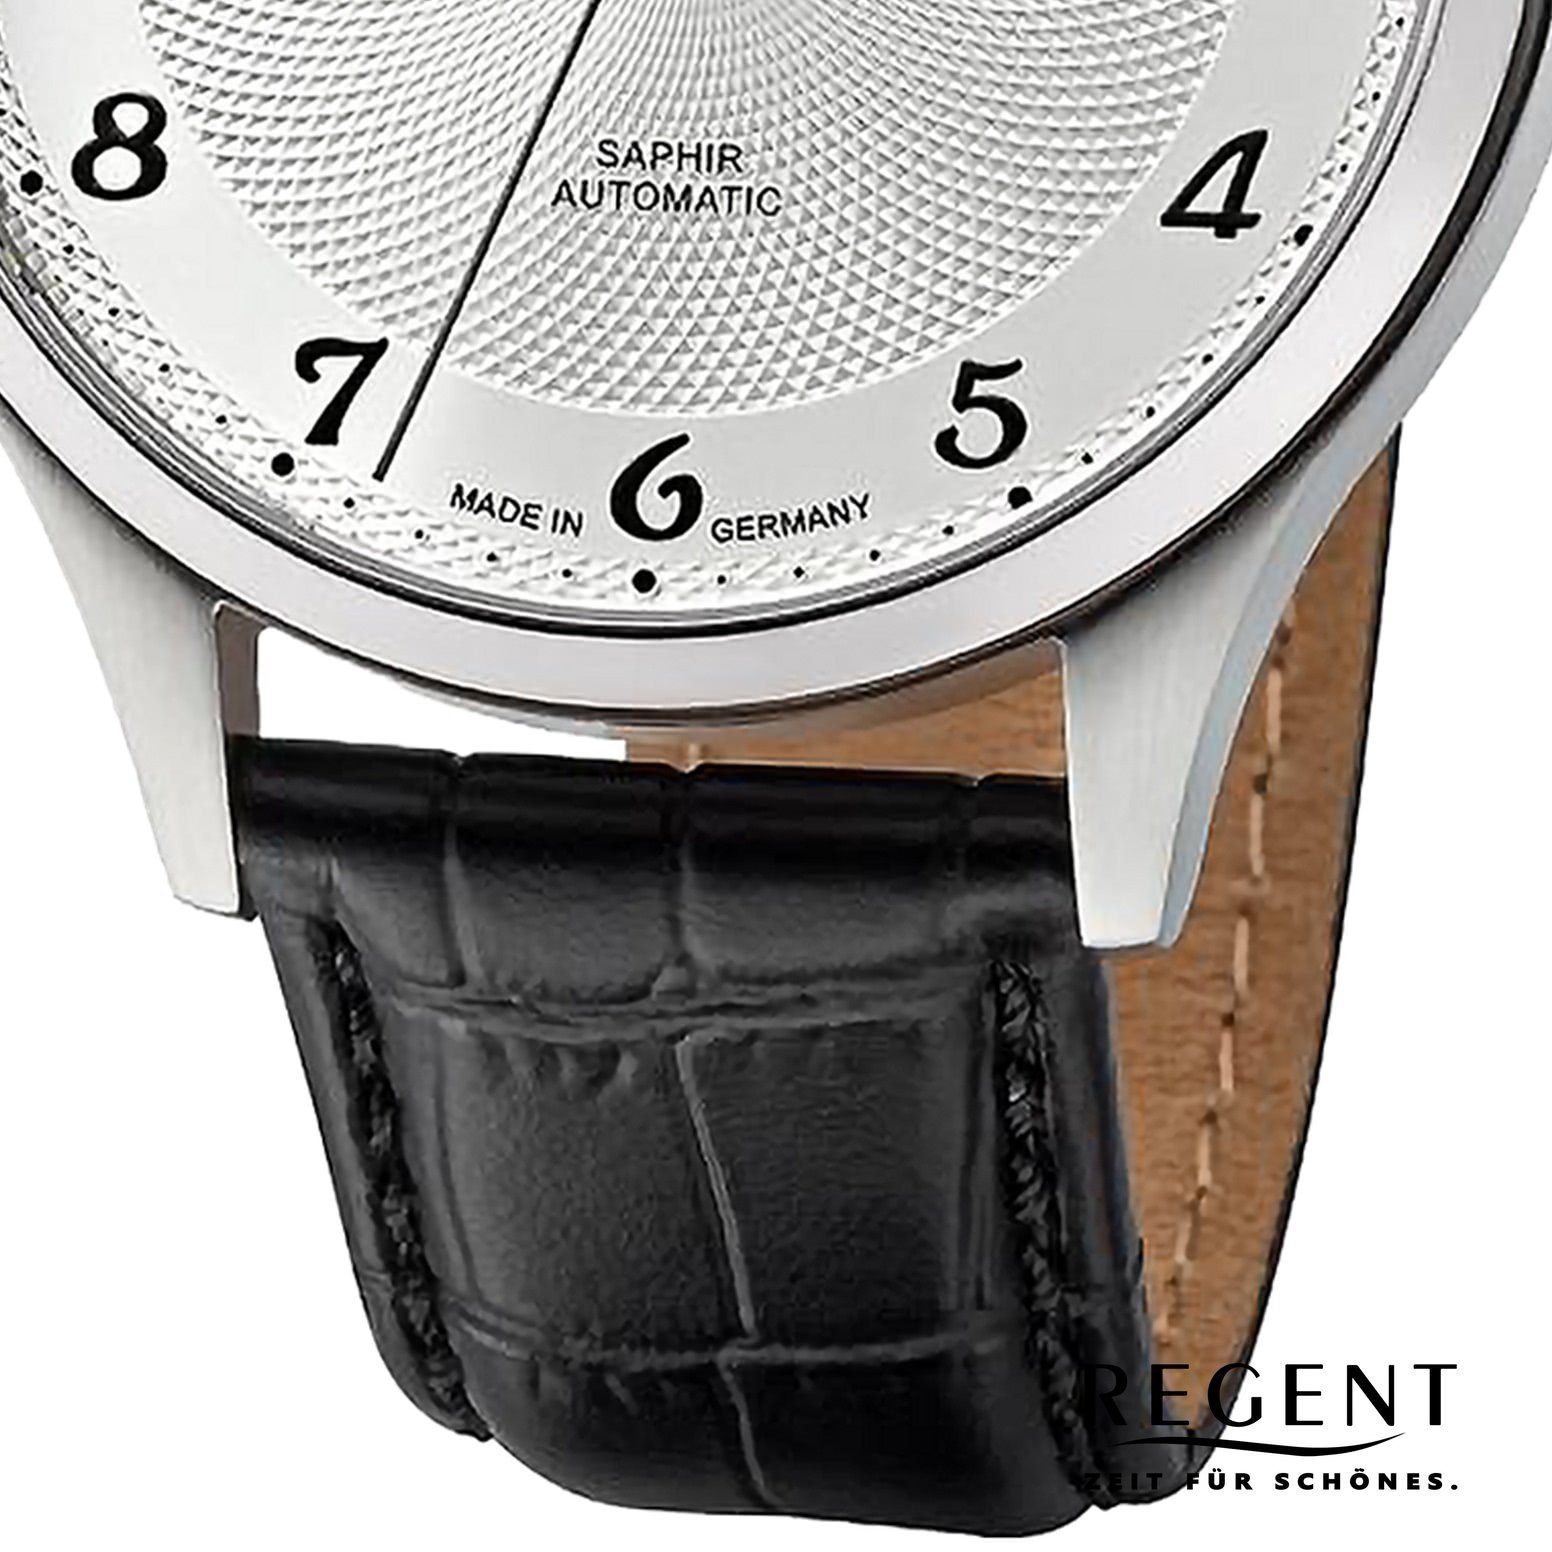 Regent Quarzuhr Analog, Herren extra Regent groß Herren (ca. Armbanduhr rund, 42mm), Lederarmband Armbanduhr